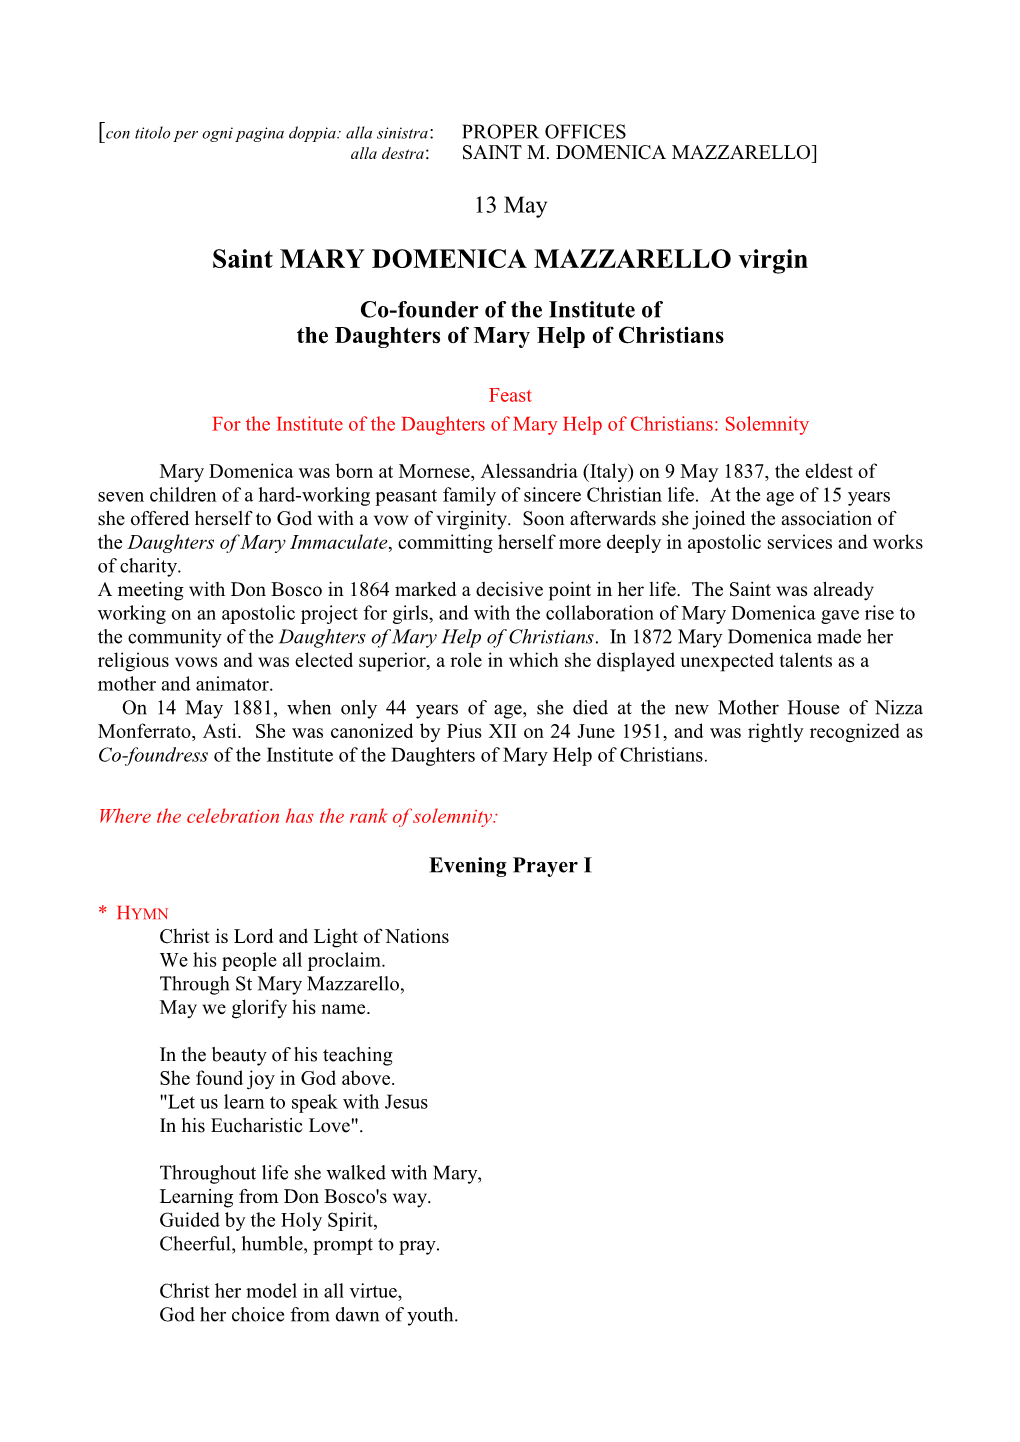 Saint MARY DOMENICA MAZZARELLO Virgin